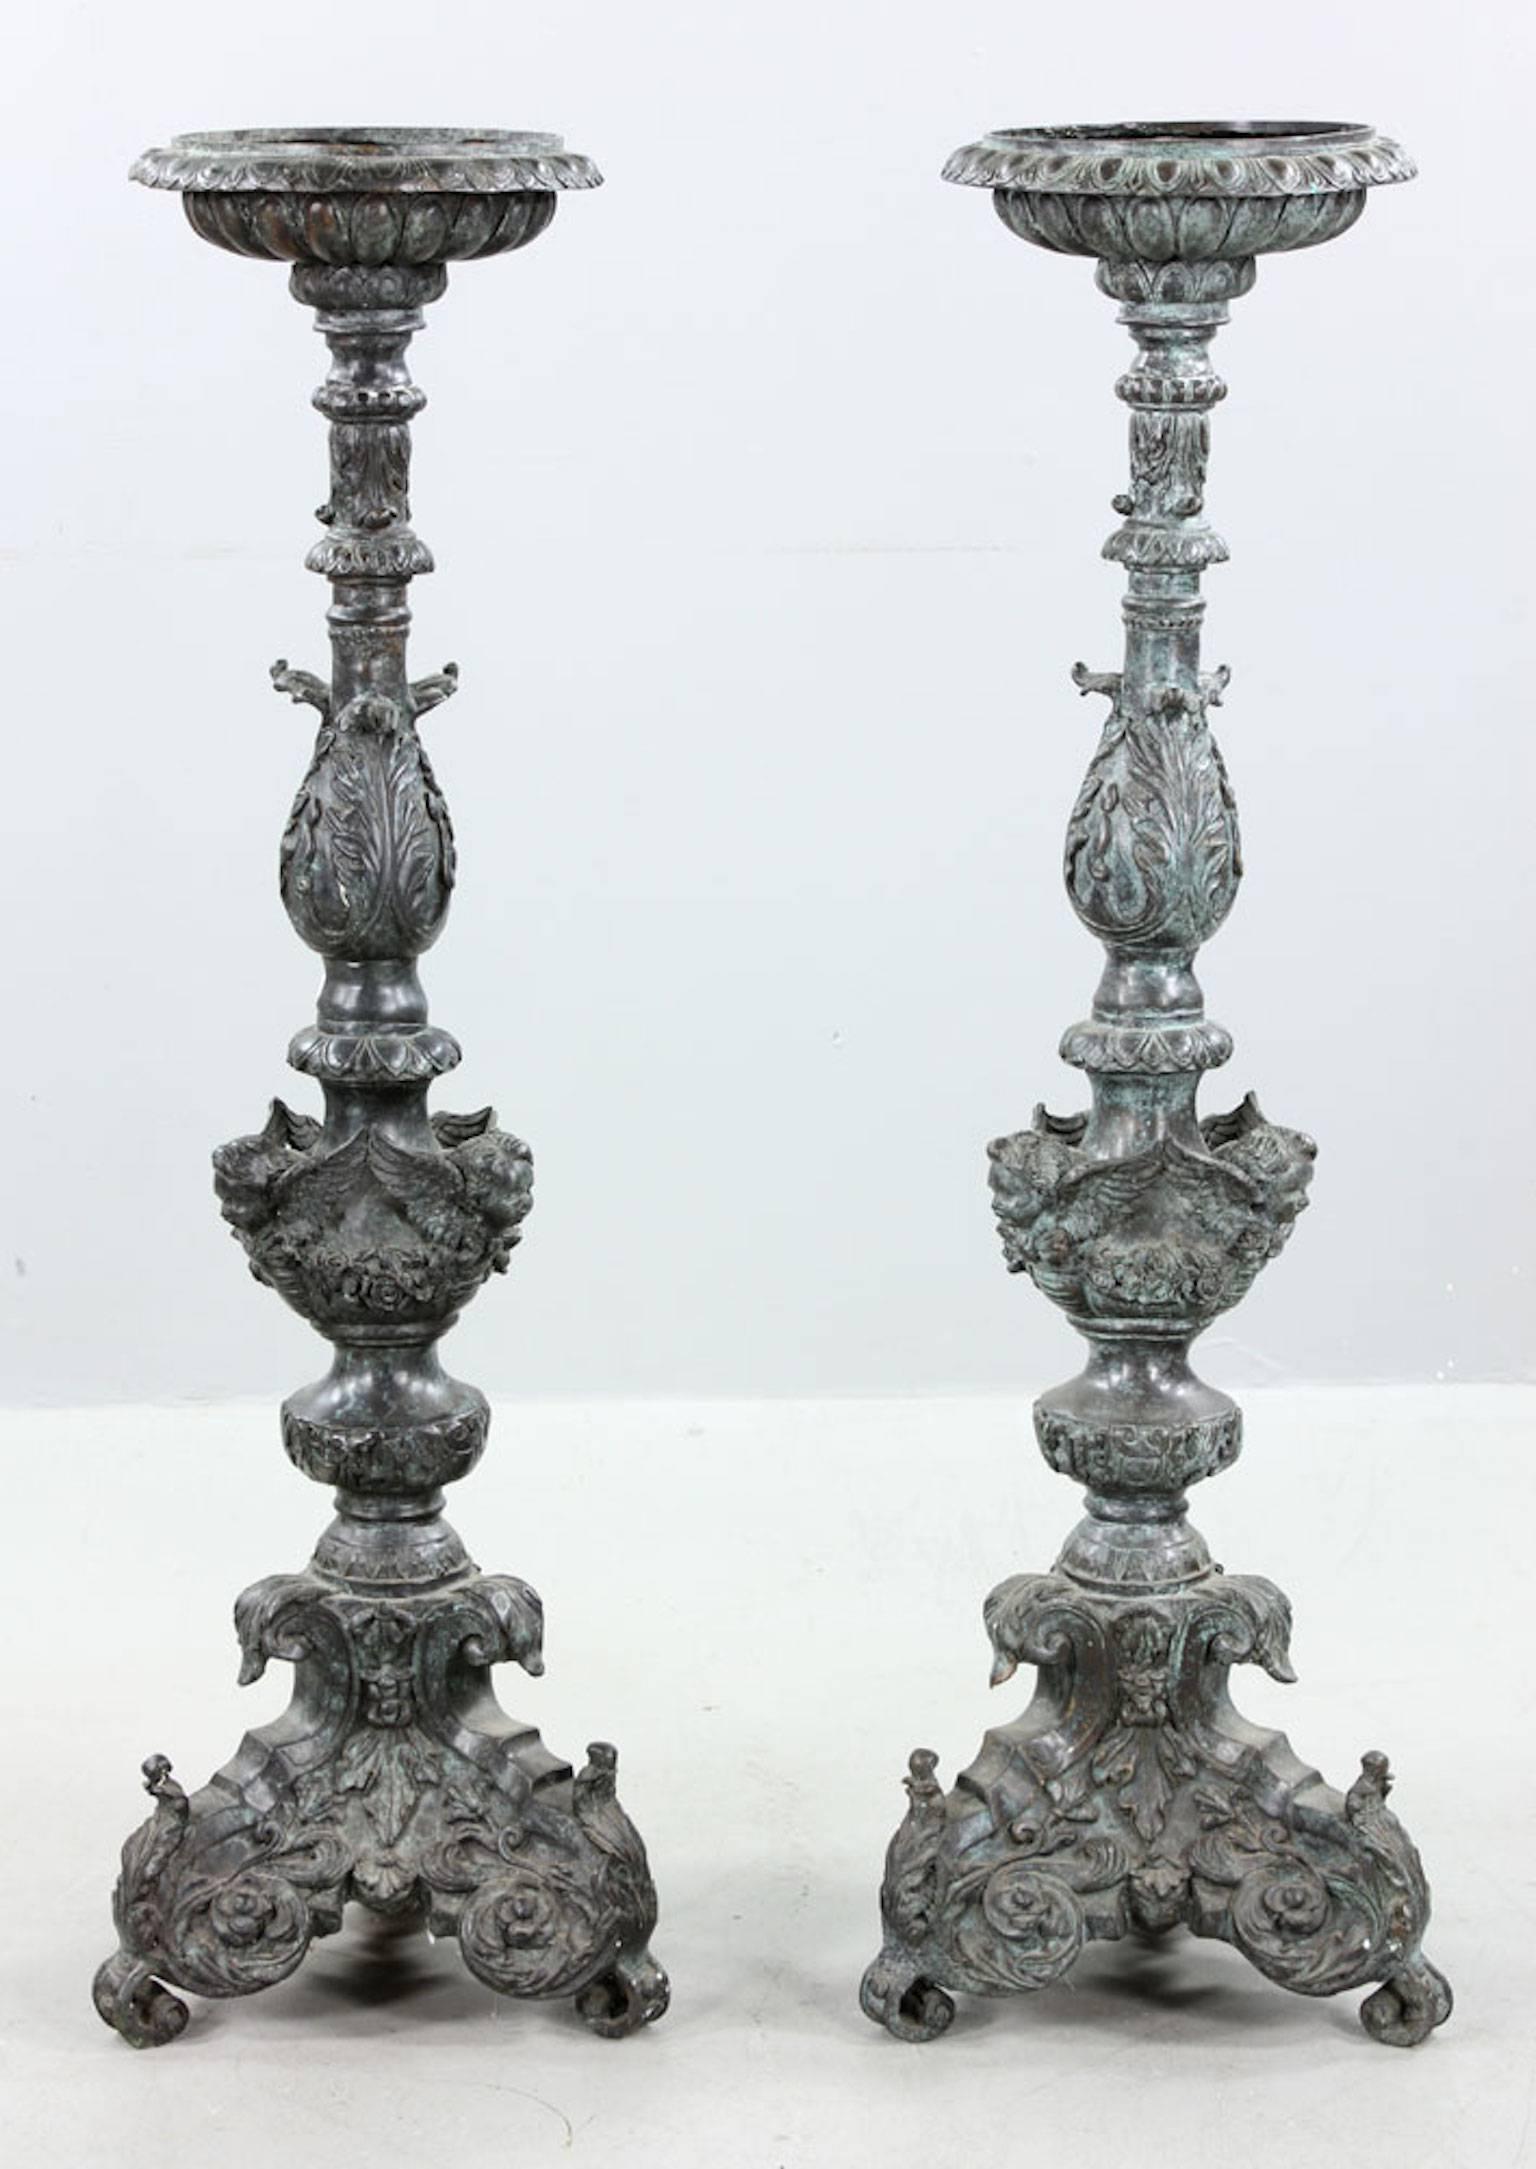 Pair of 19th century Renaissance Revival torchieres, bronze.